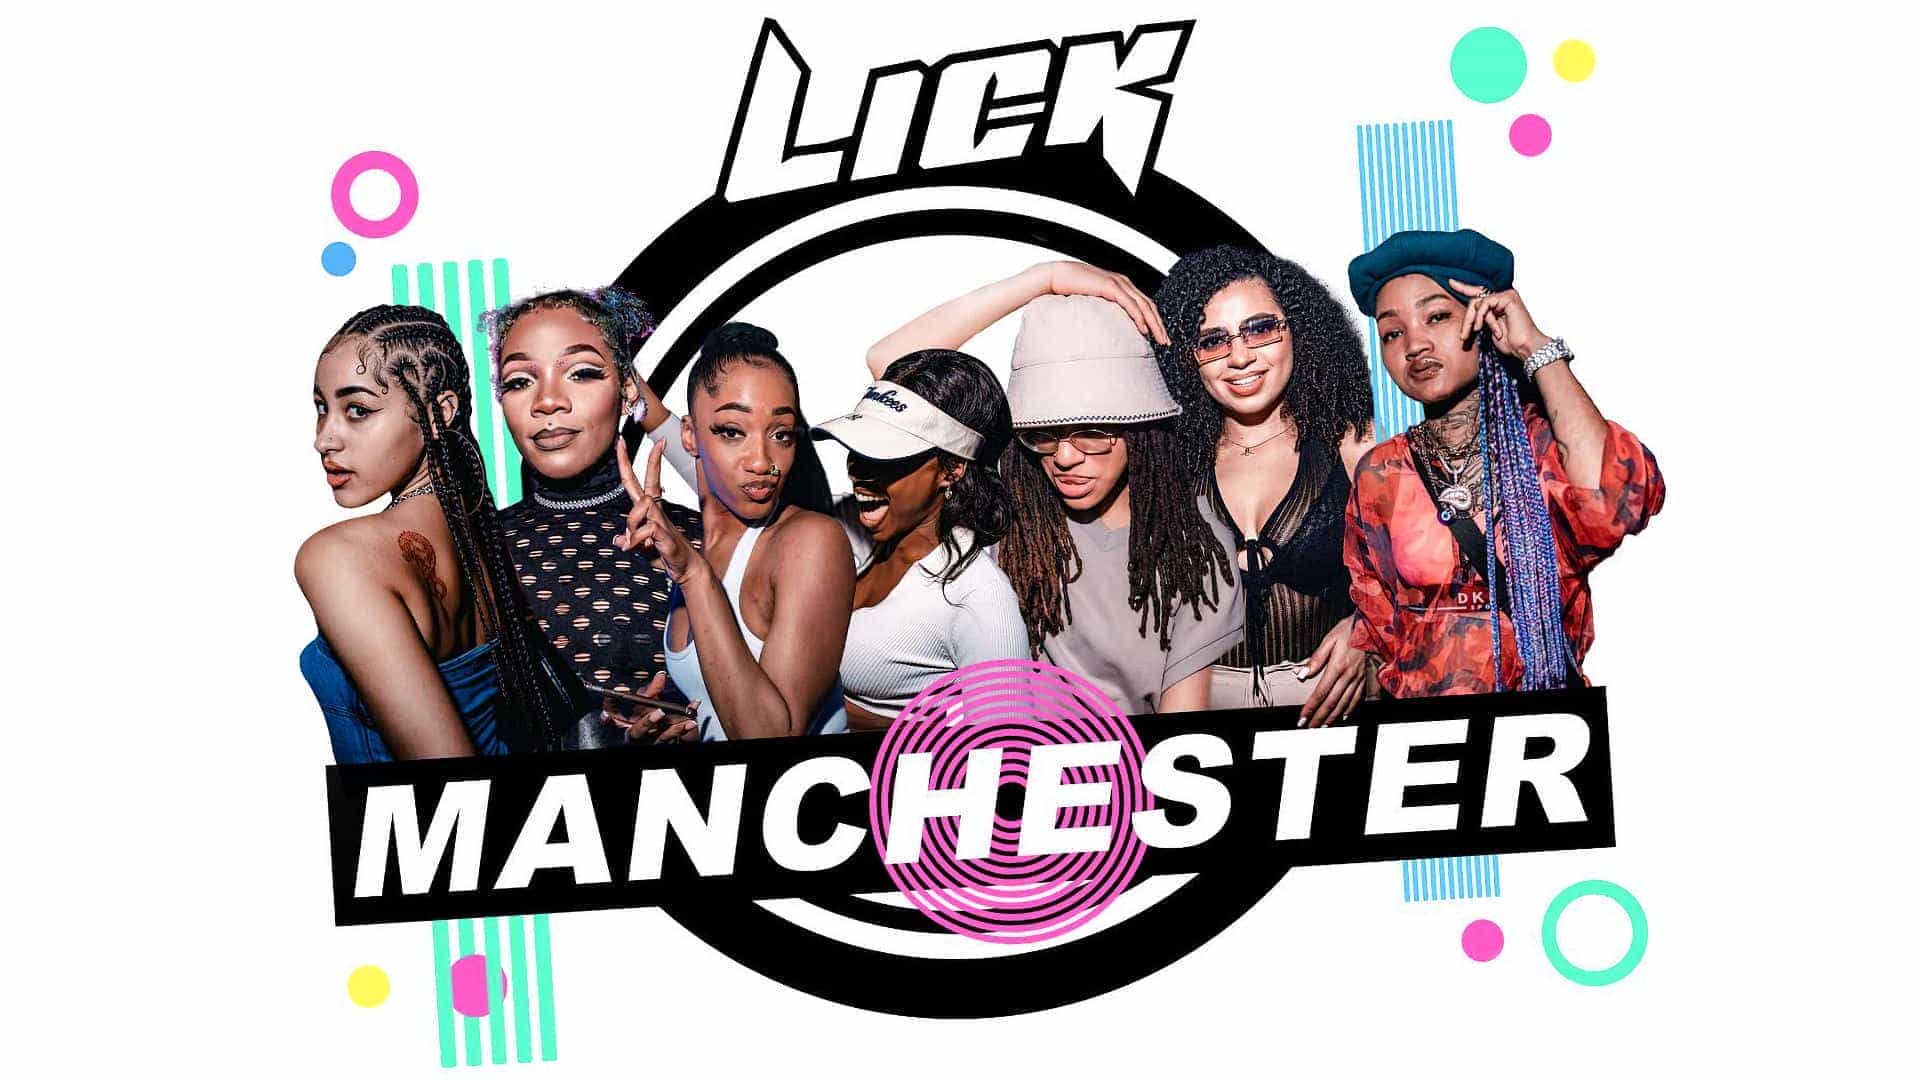 Lick Manchester